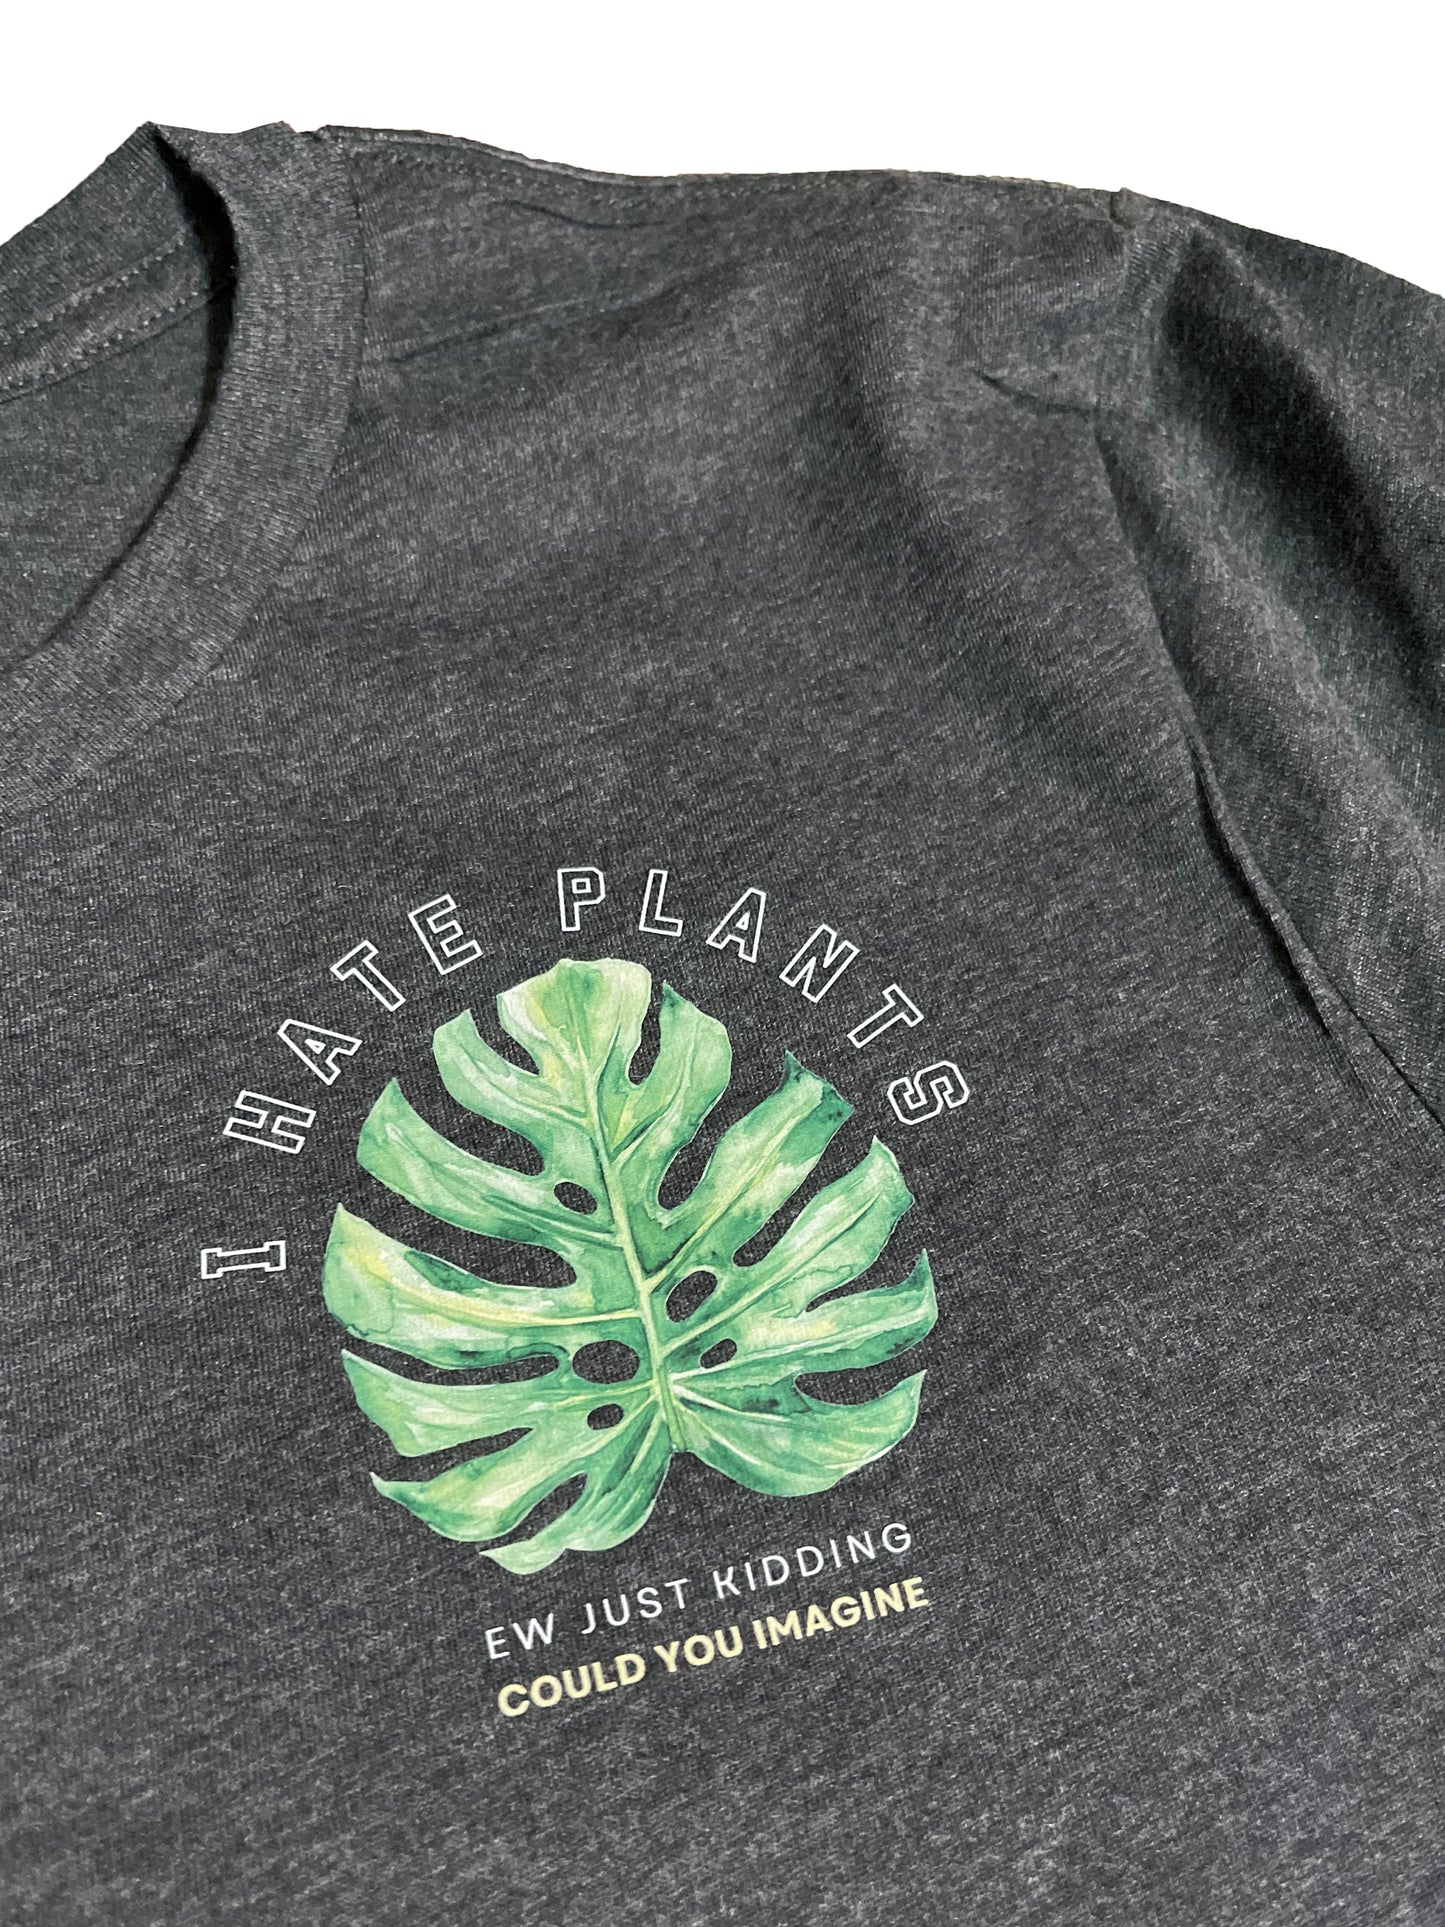 i hate plants (ew just kidding) t-shirt